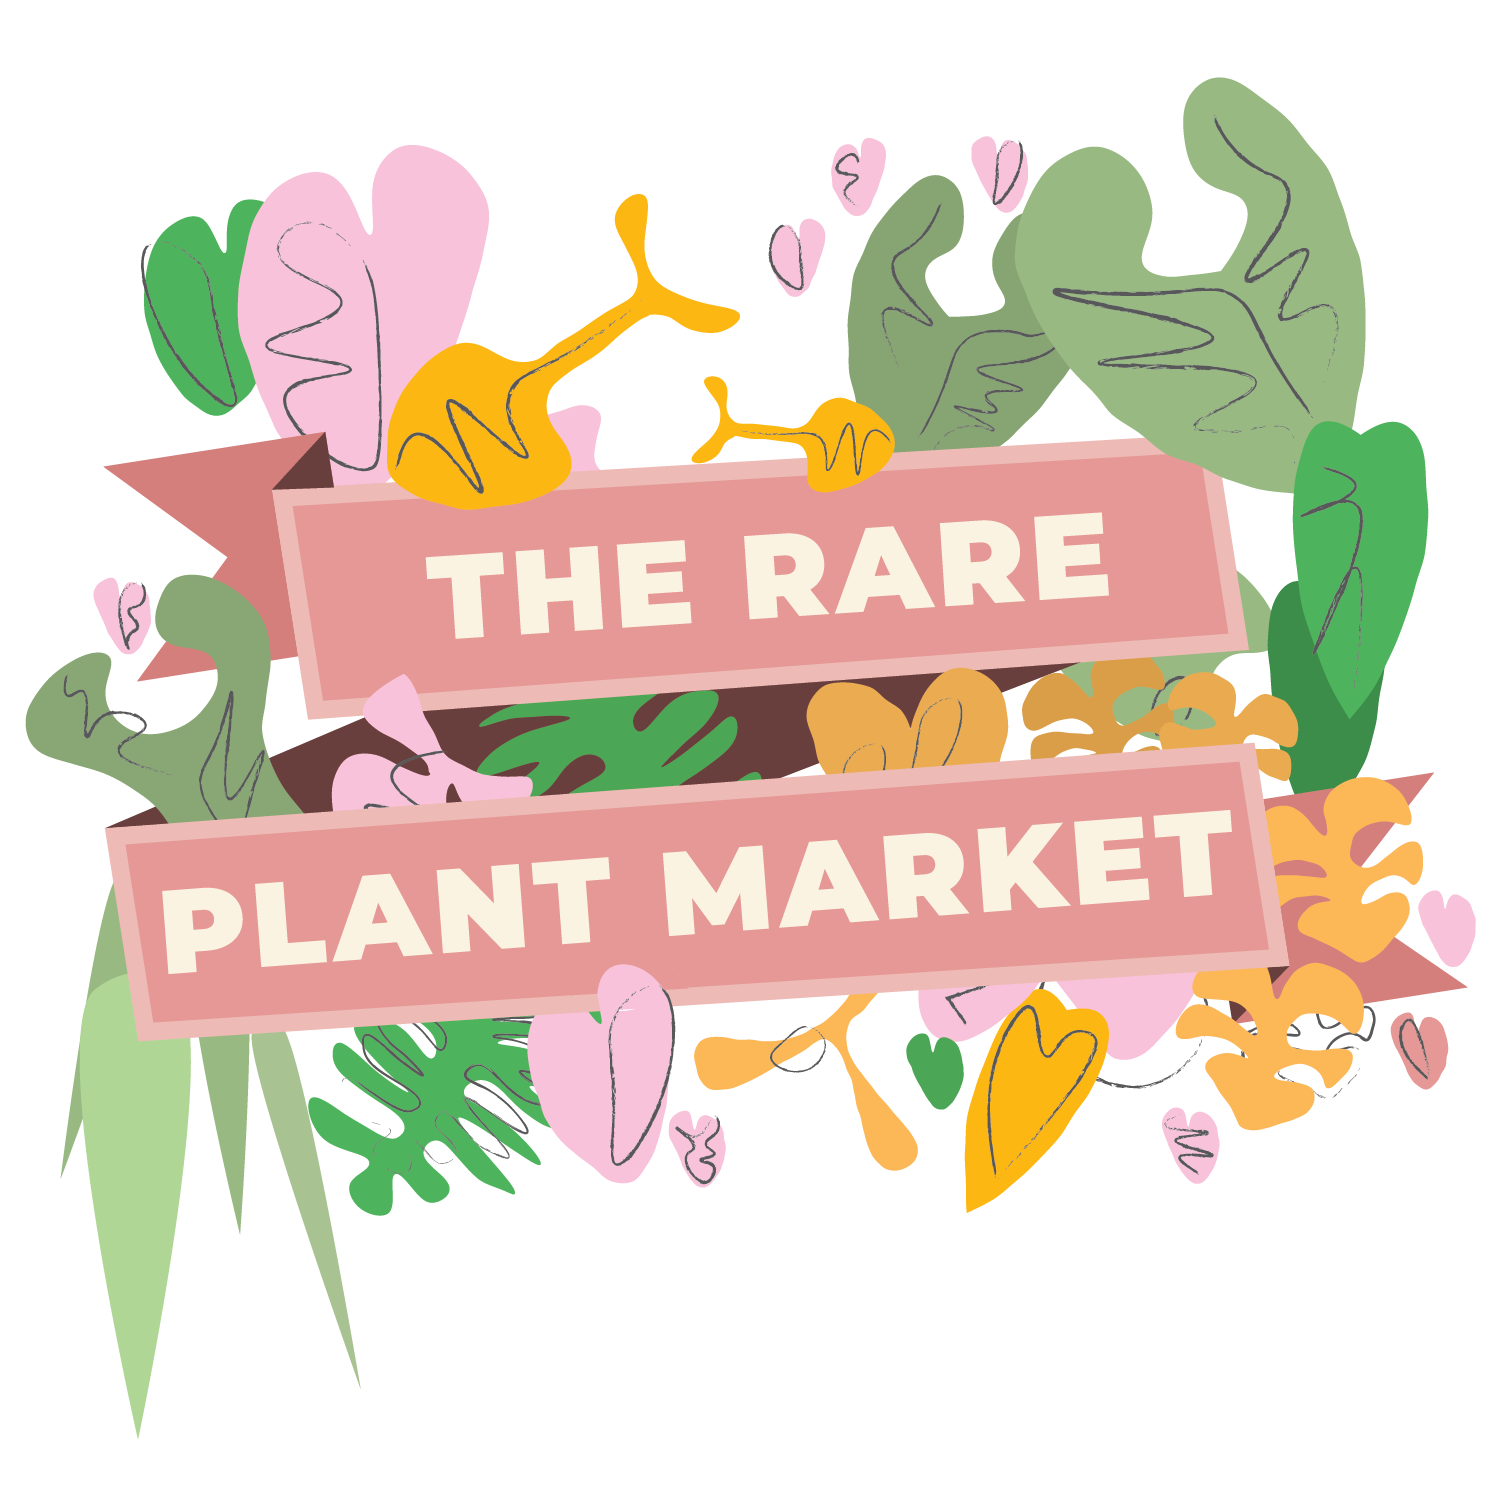 Aplanty House: The Rare Plant Market